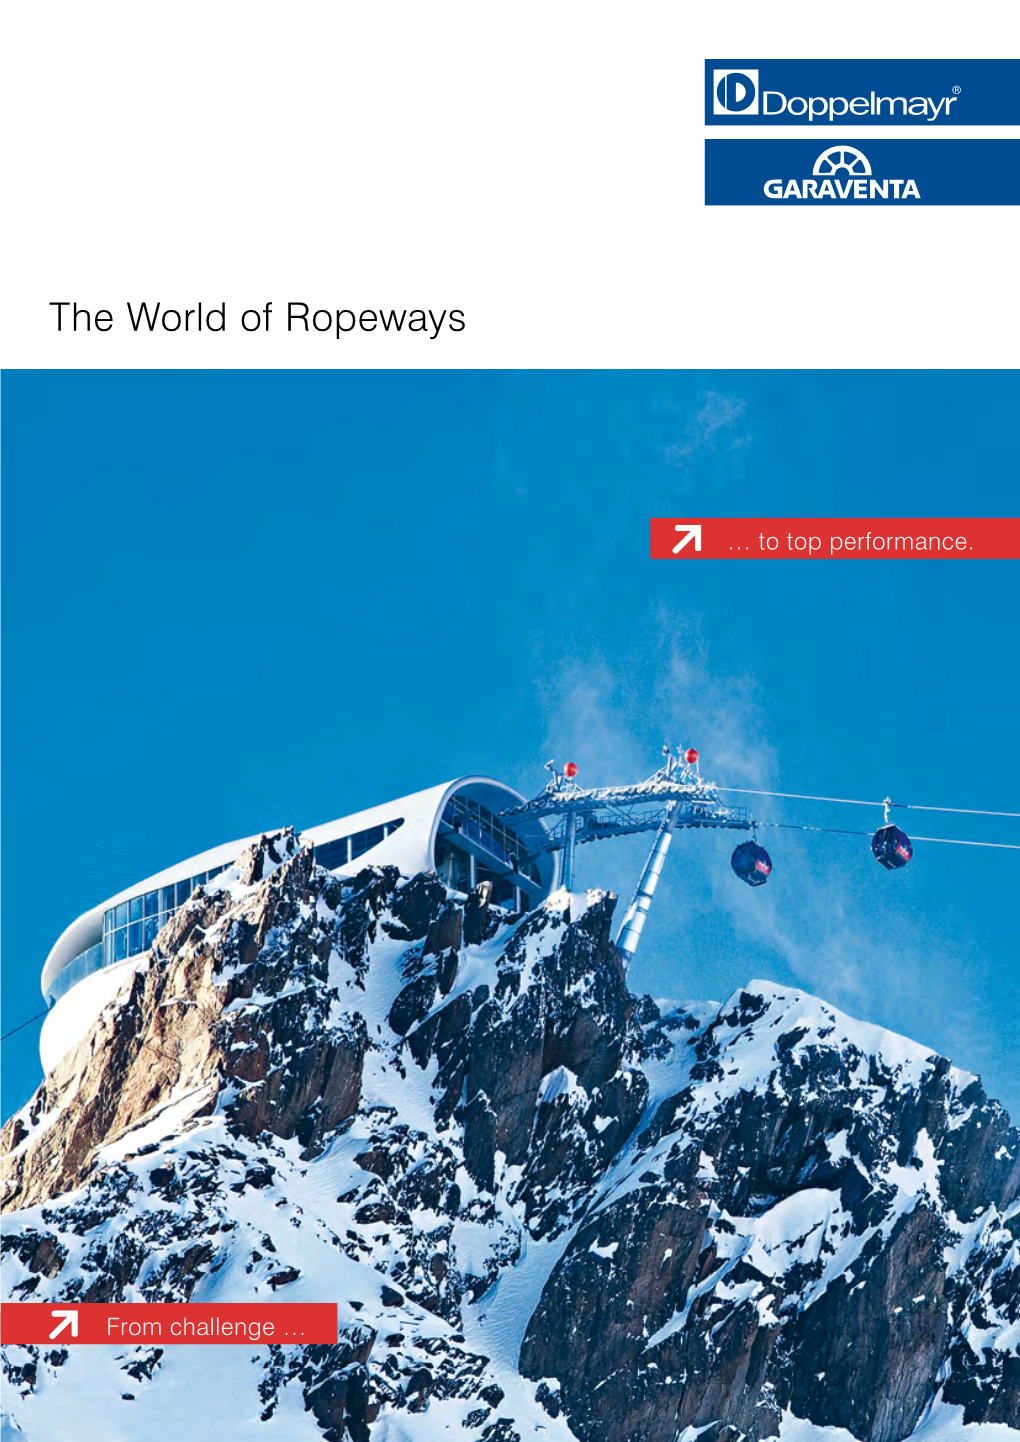 The World of Ropeways